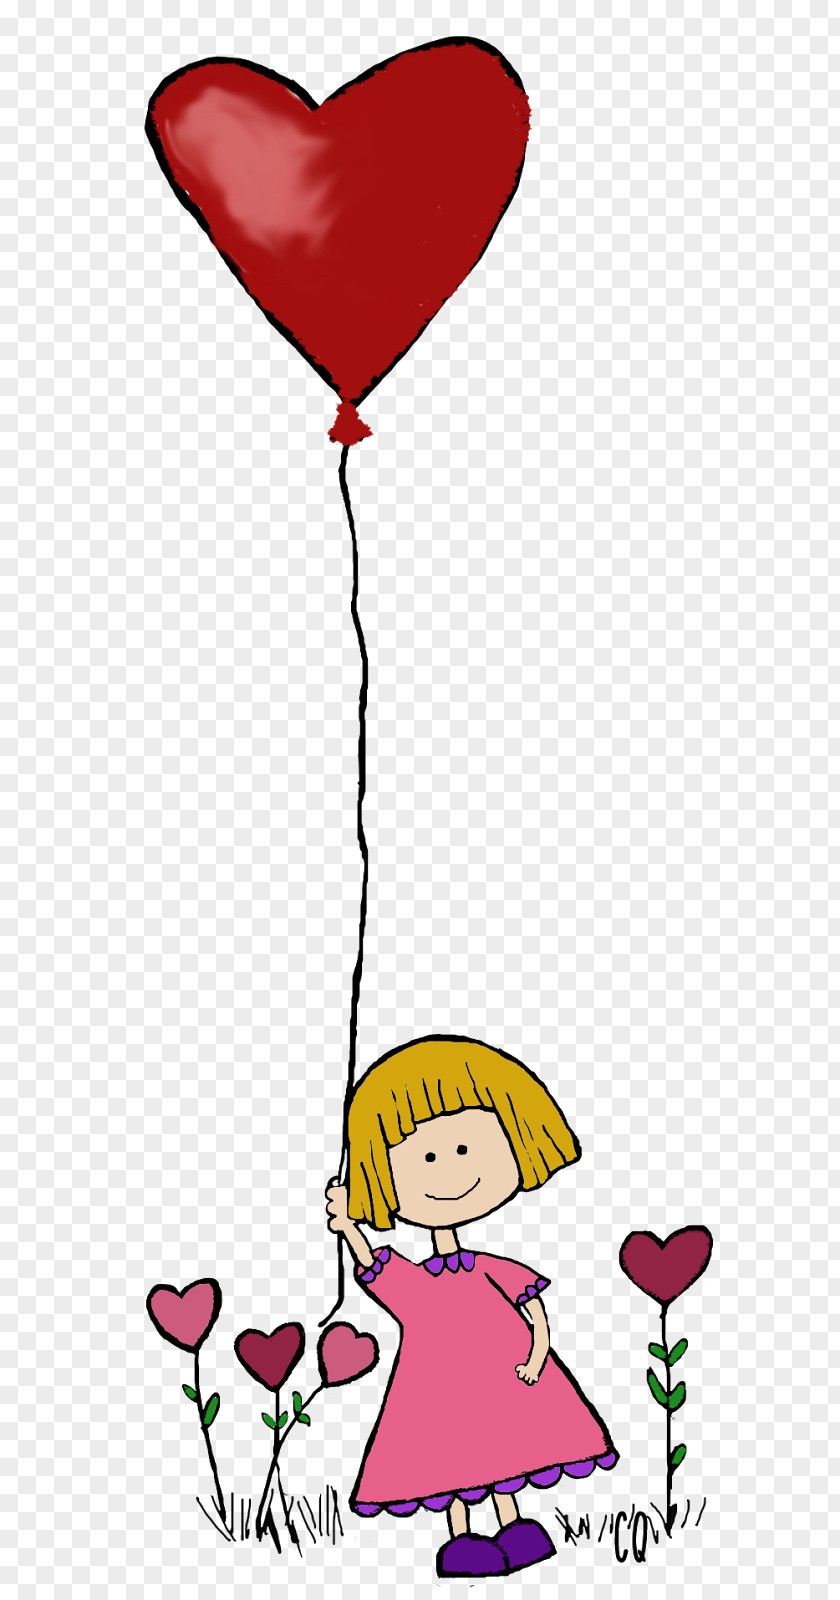 Balloon Petal Cartoon Character Clip Art PNG